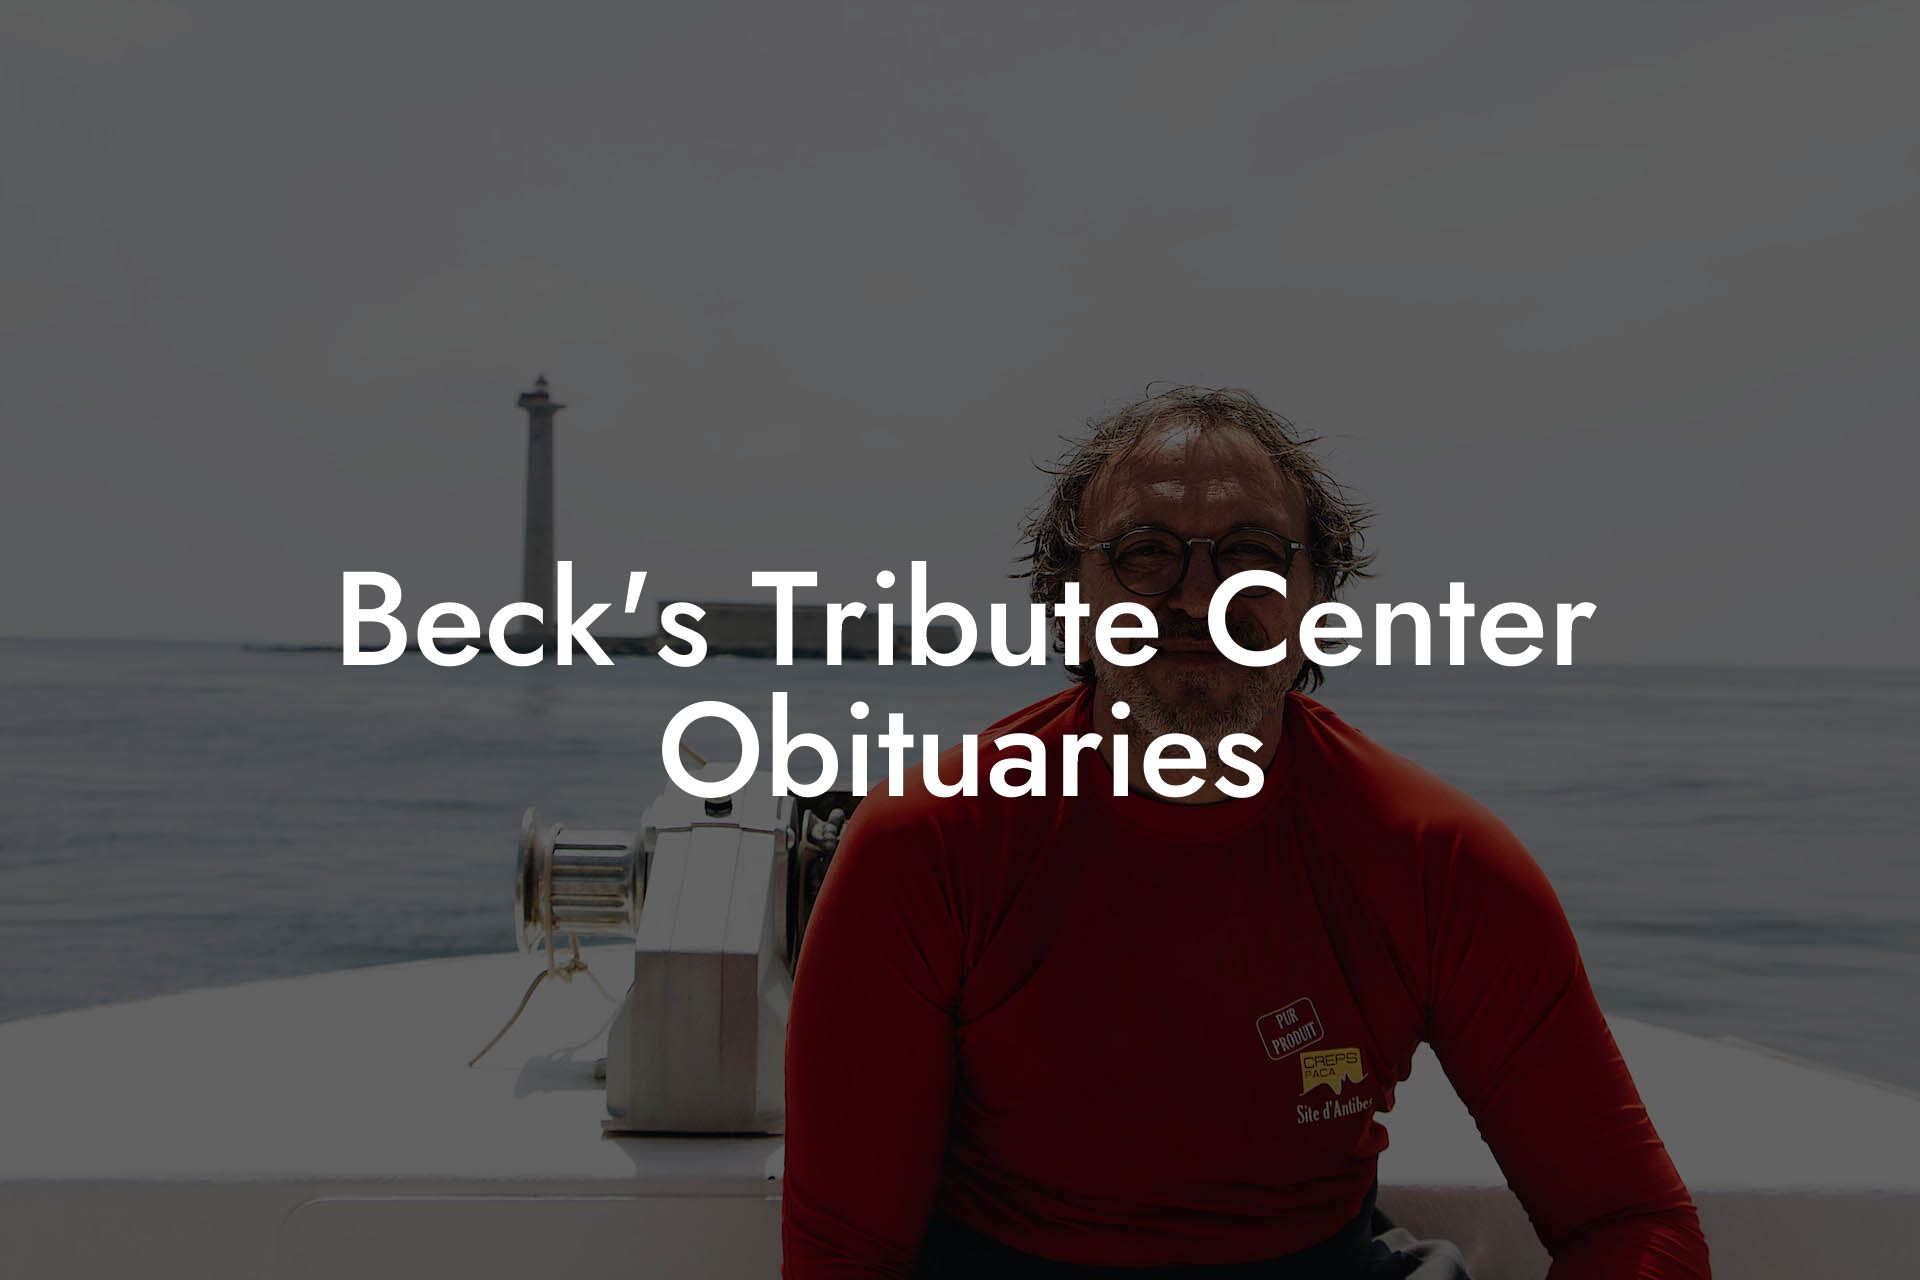 Beck's Tribute Center Obituaries